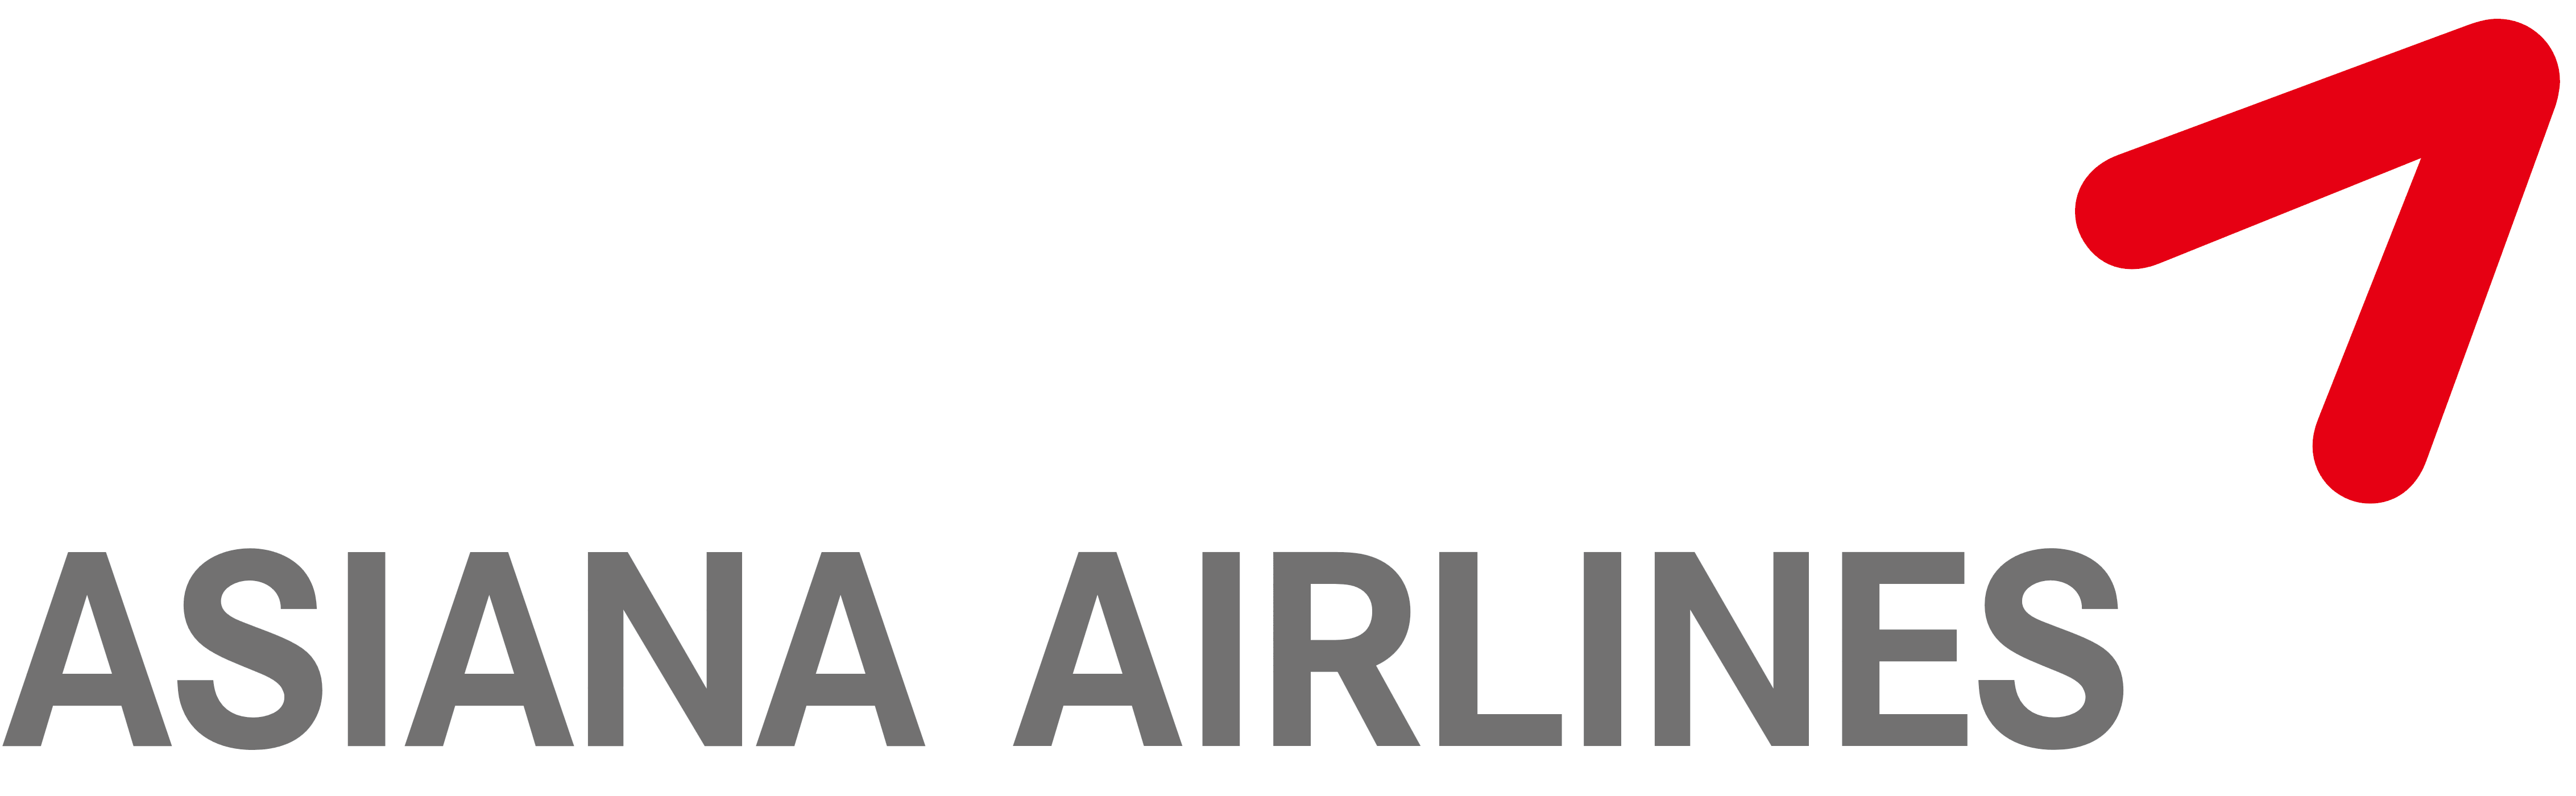 Asiana Airlines logo, logotype